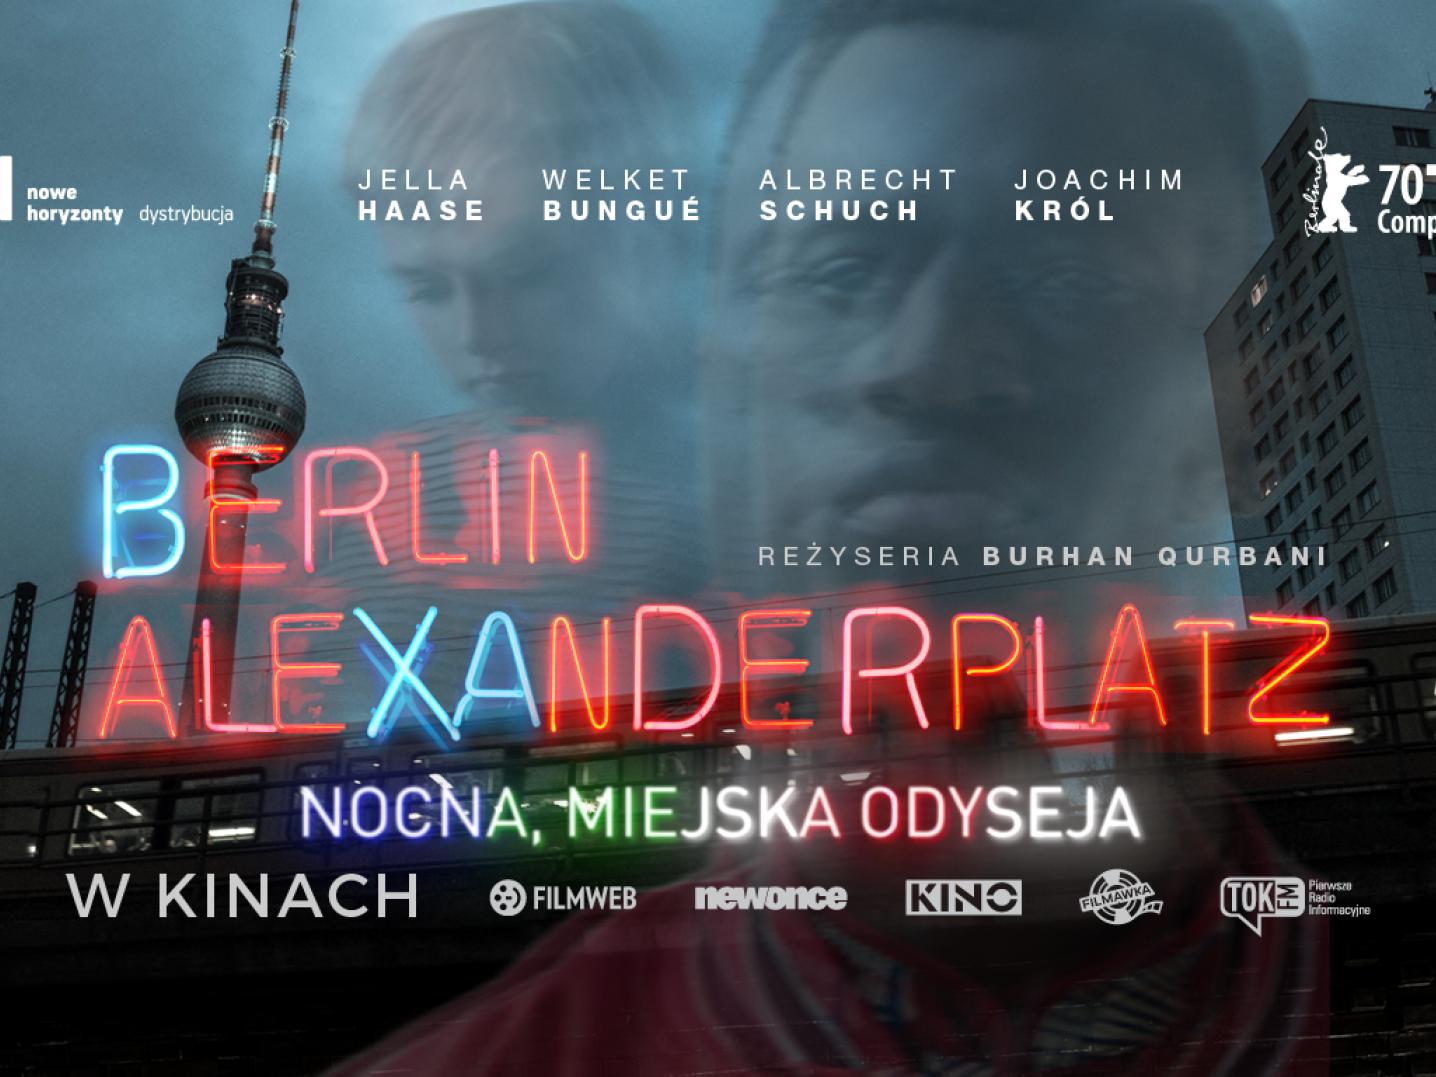 'Berlin Alexanderplatz', directed by Burhan Qurbani